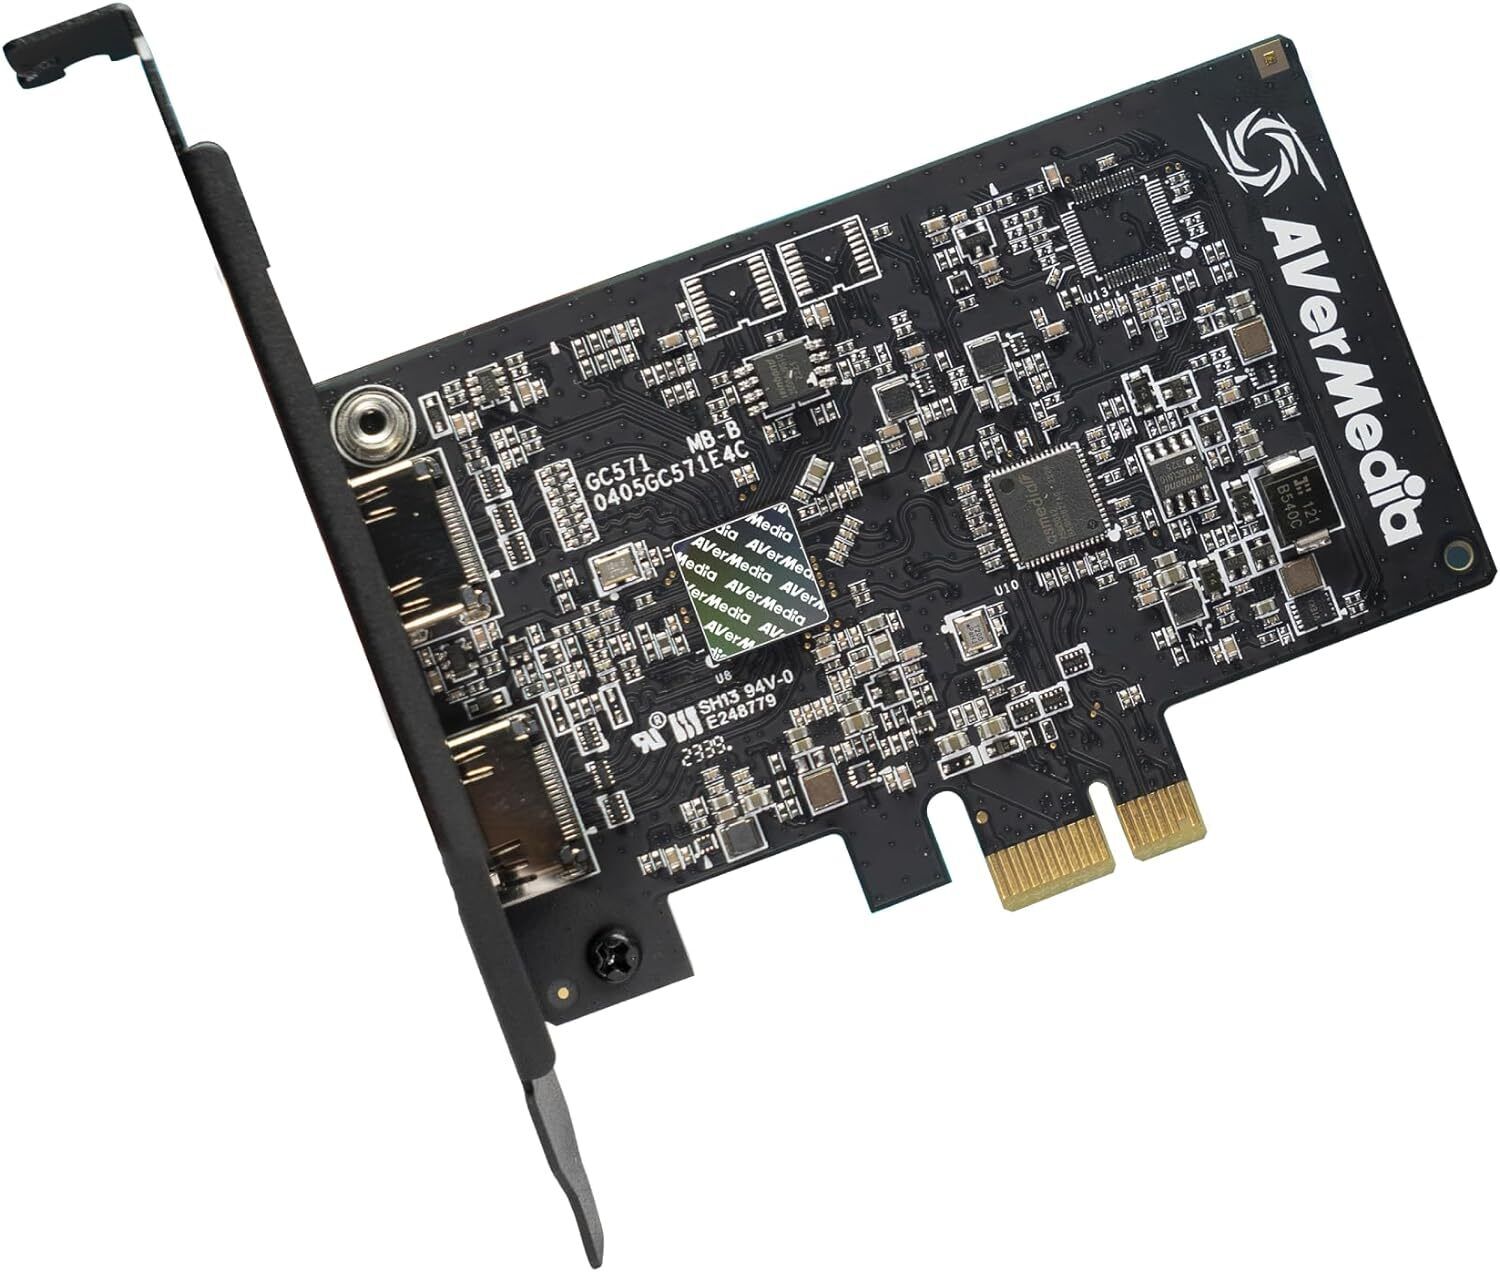 AVerMedia GC571 HDMI Capture Card, Live Streamer Ultra HD 4K60 Pass